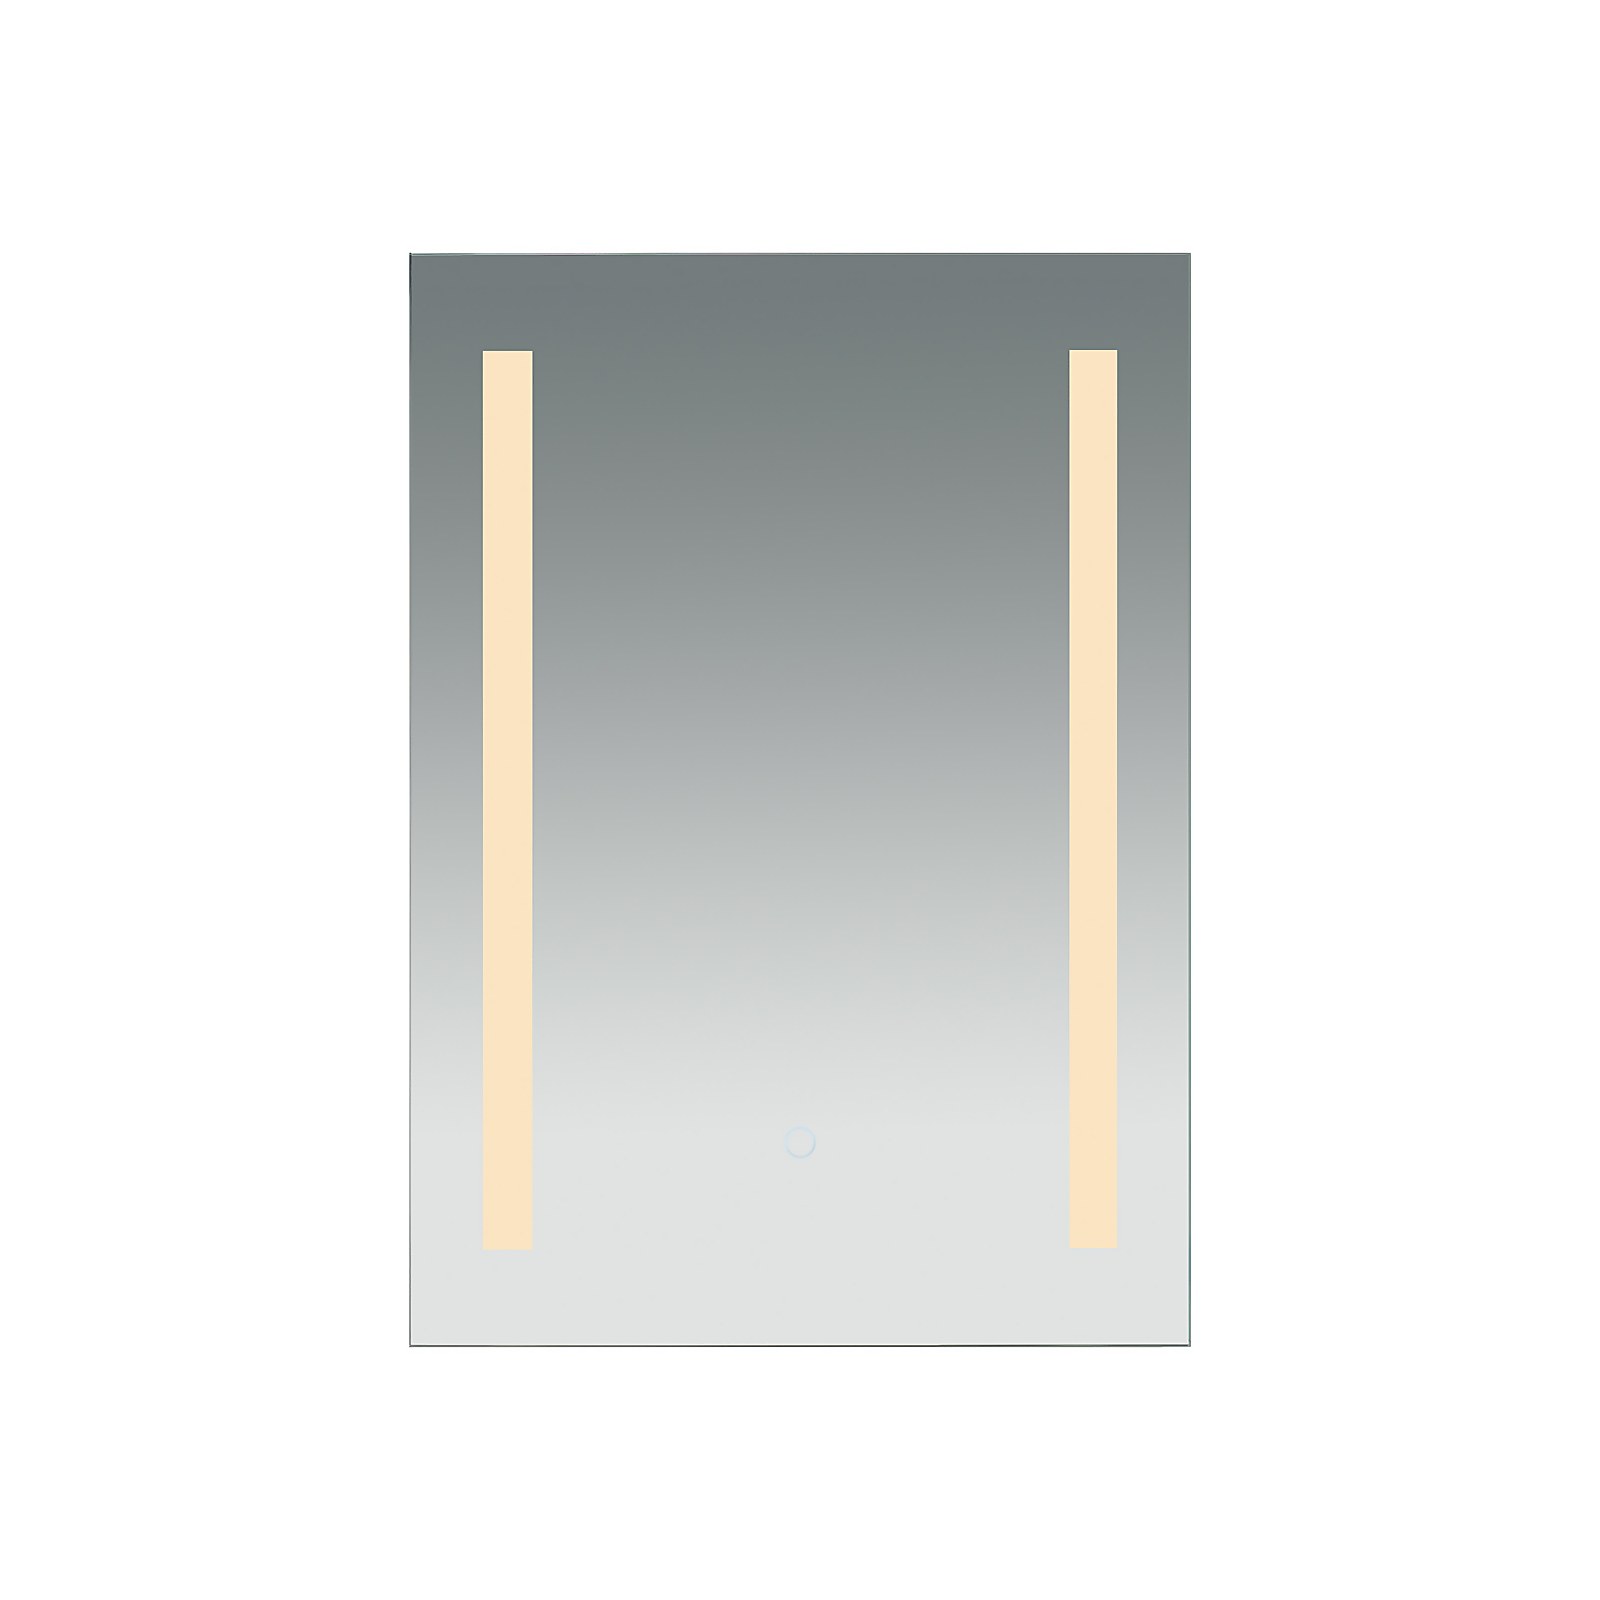 Photo of Painswick Vertical Light Bars Mirror - 700x500mm